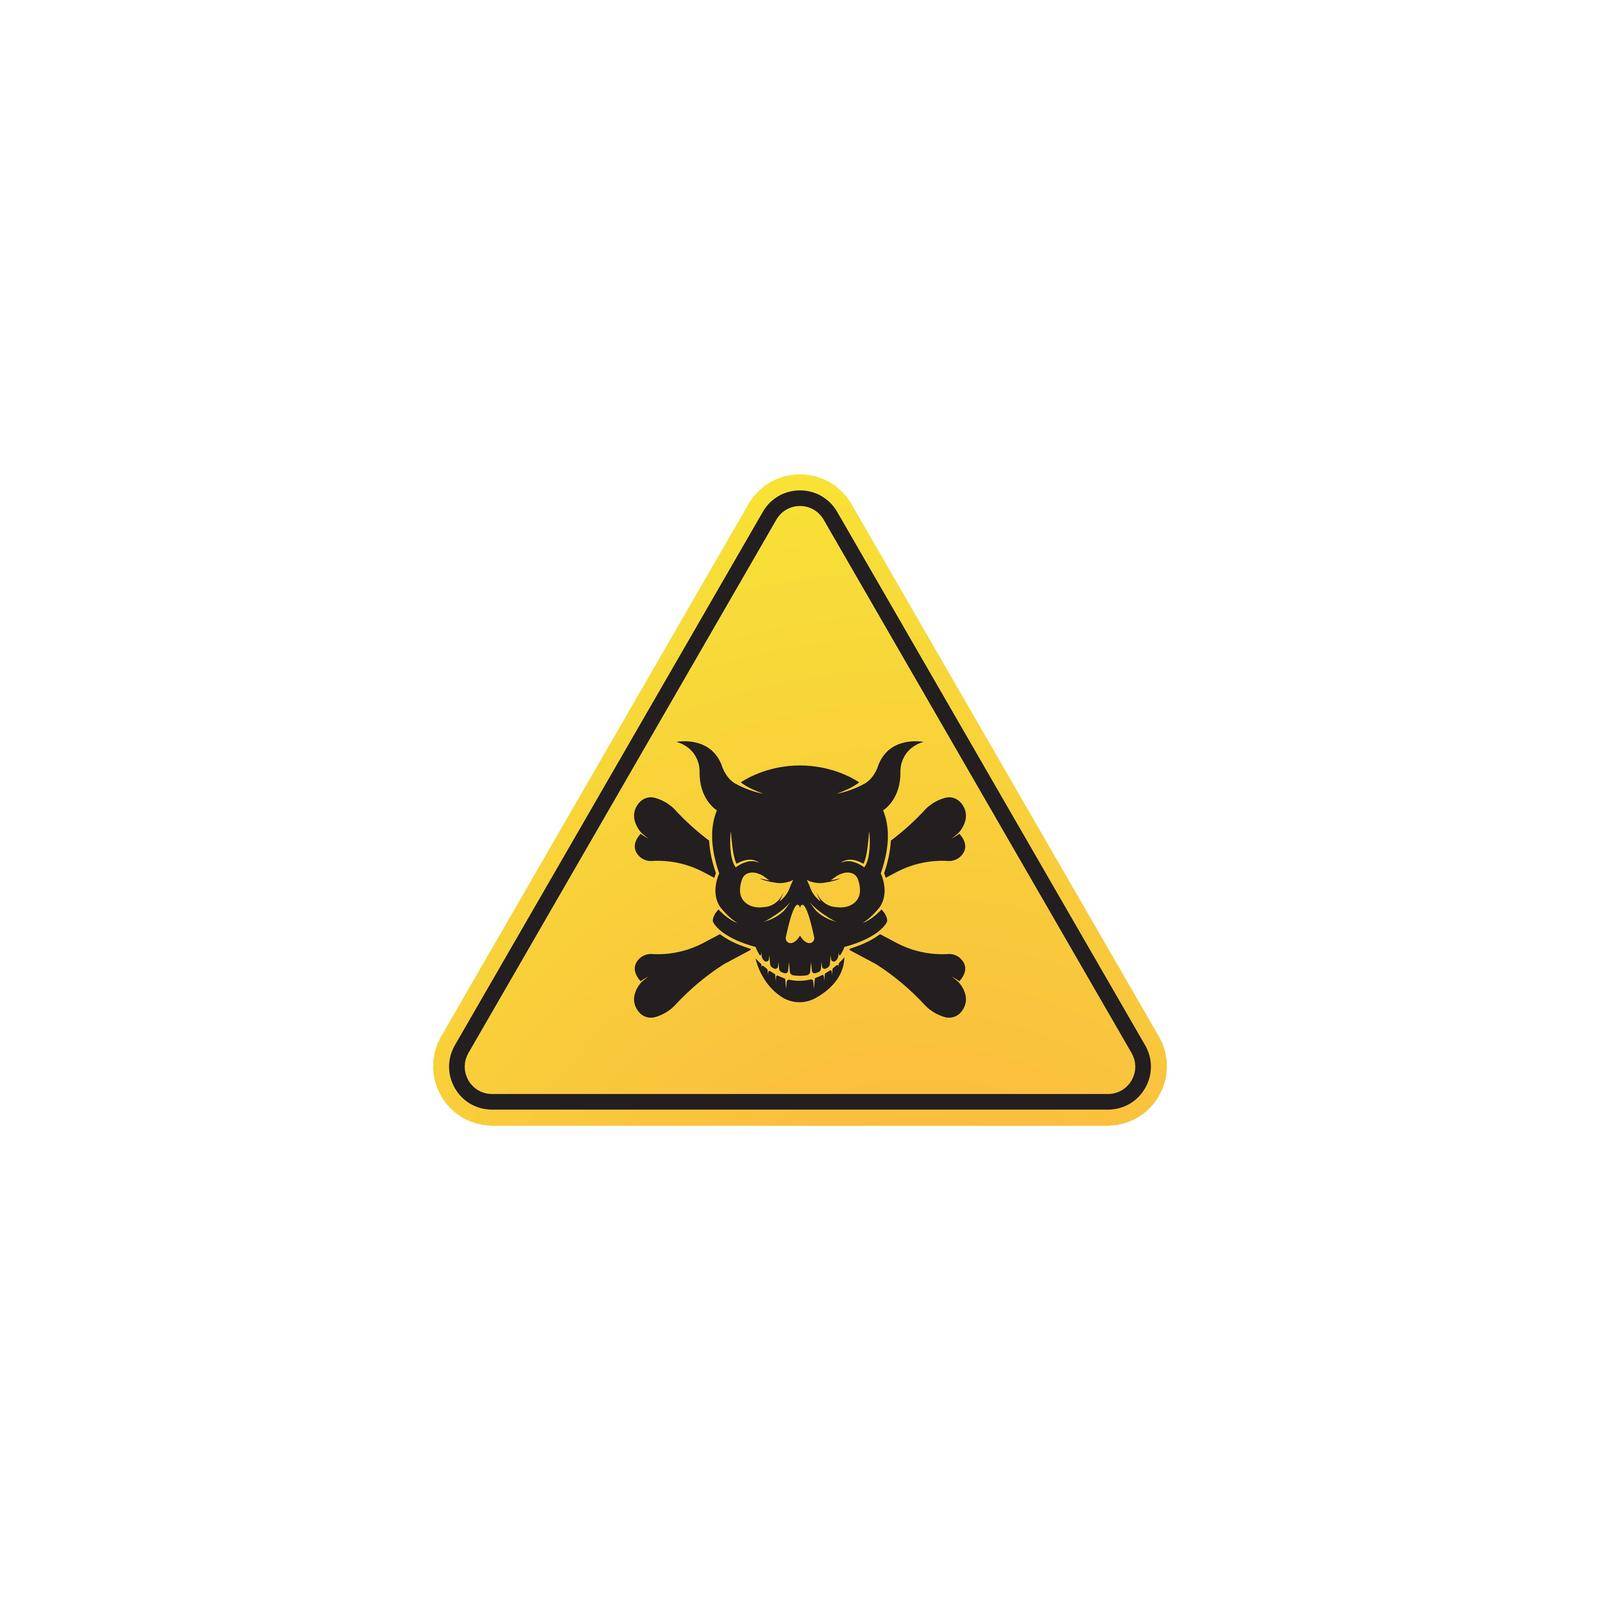 Skull Danger icon vector by Amin89